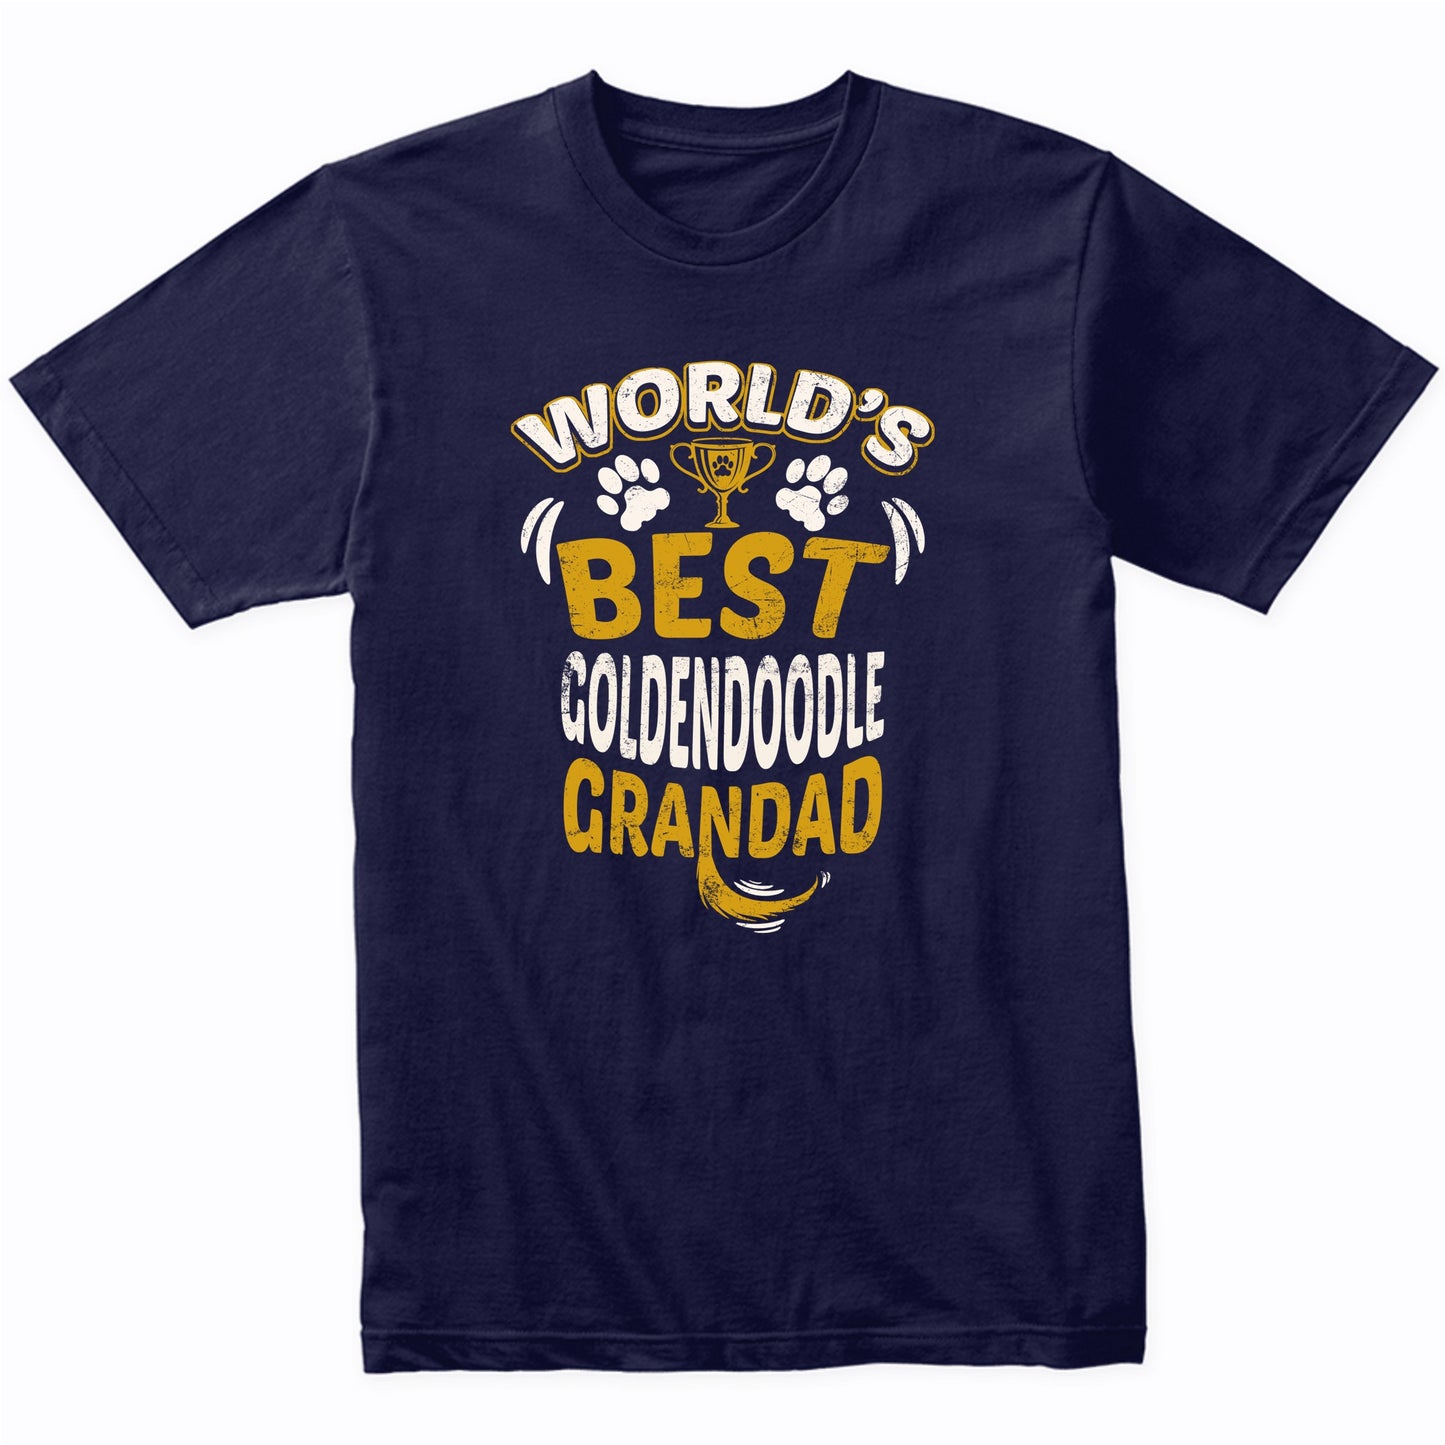 World's Best Goldendoodle Grandad Graphic T-Shirt